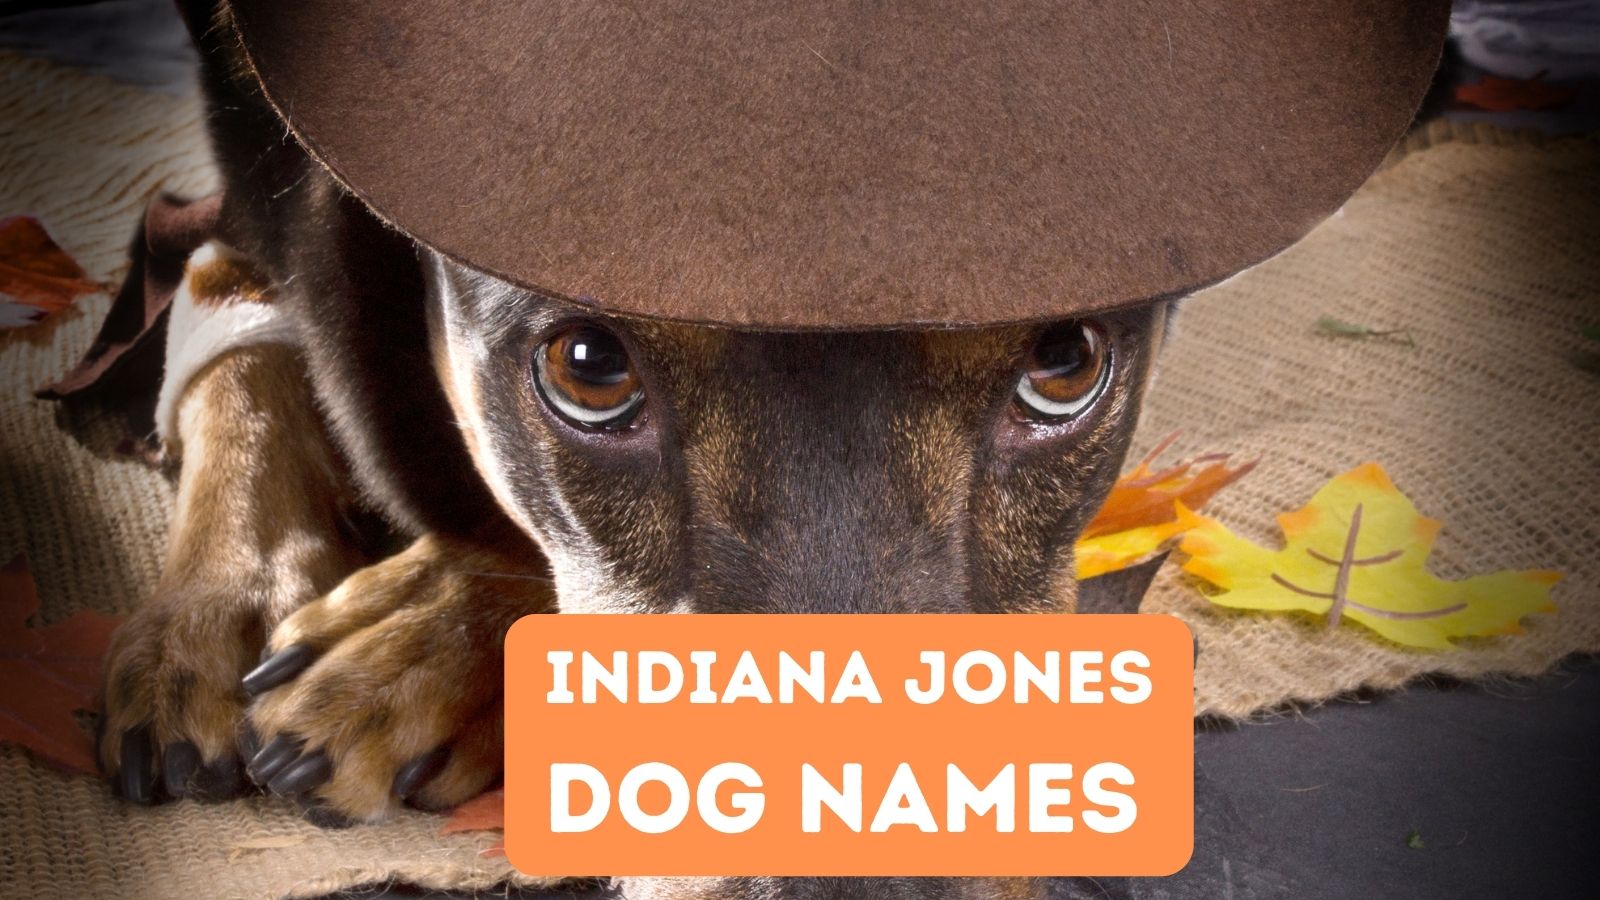 Indiana Jones dog names